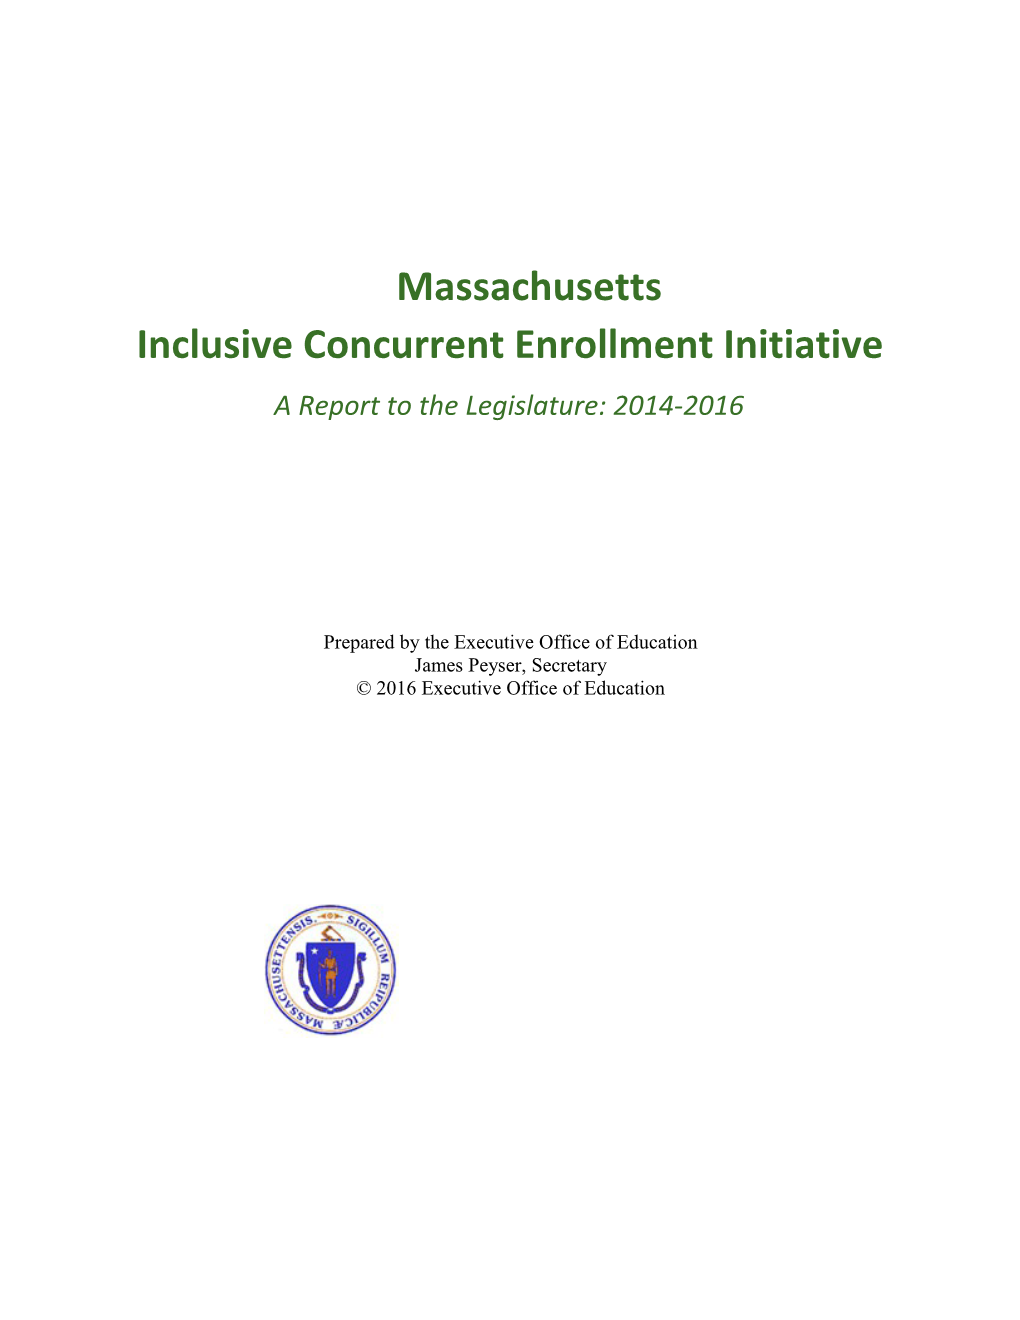 Inclusive Concurrent Enrollment Initiative